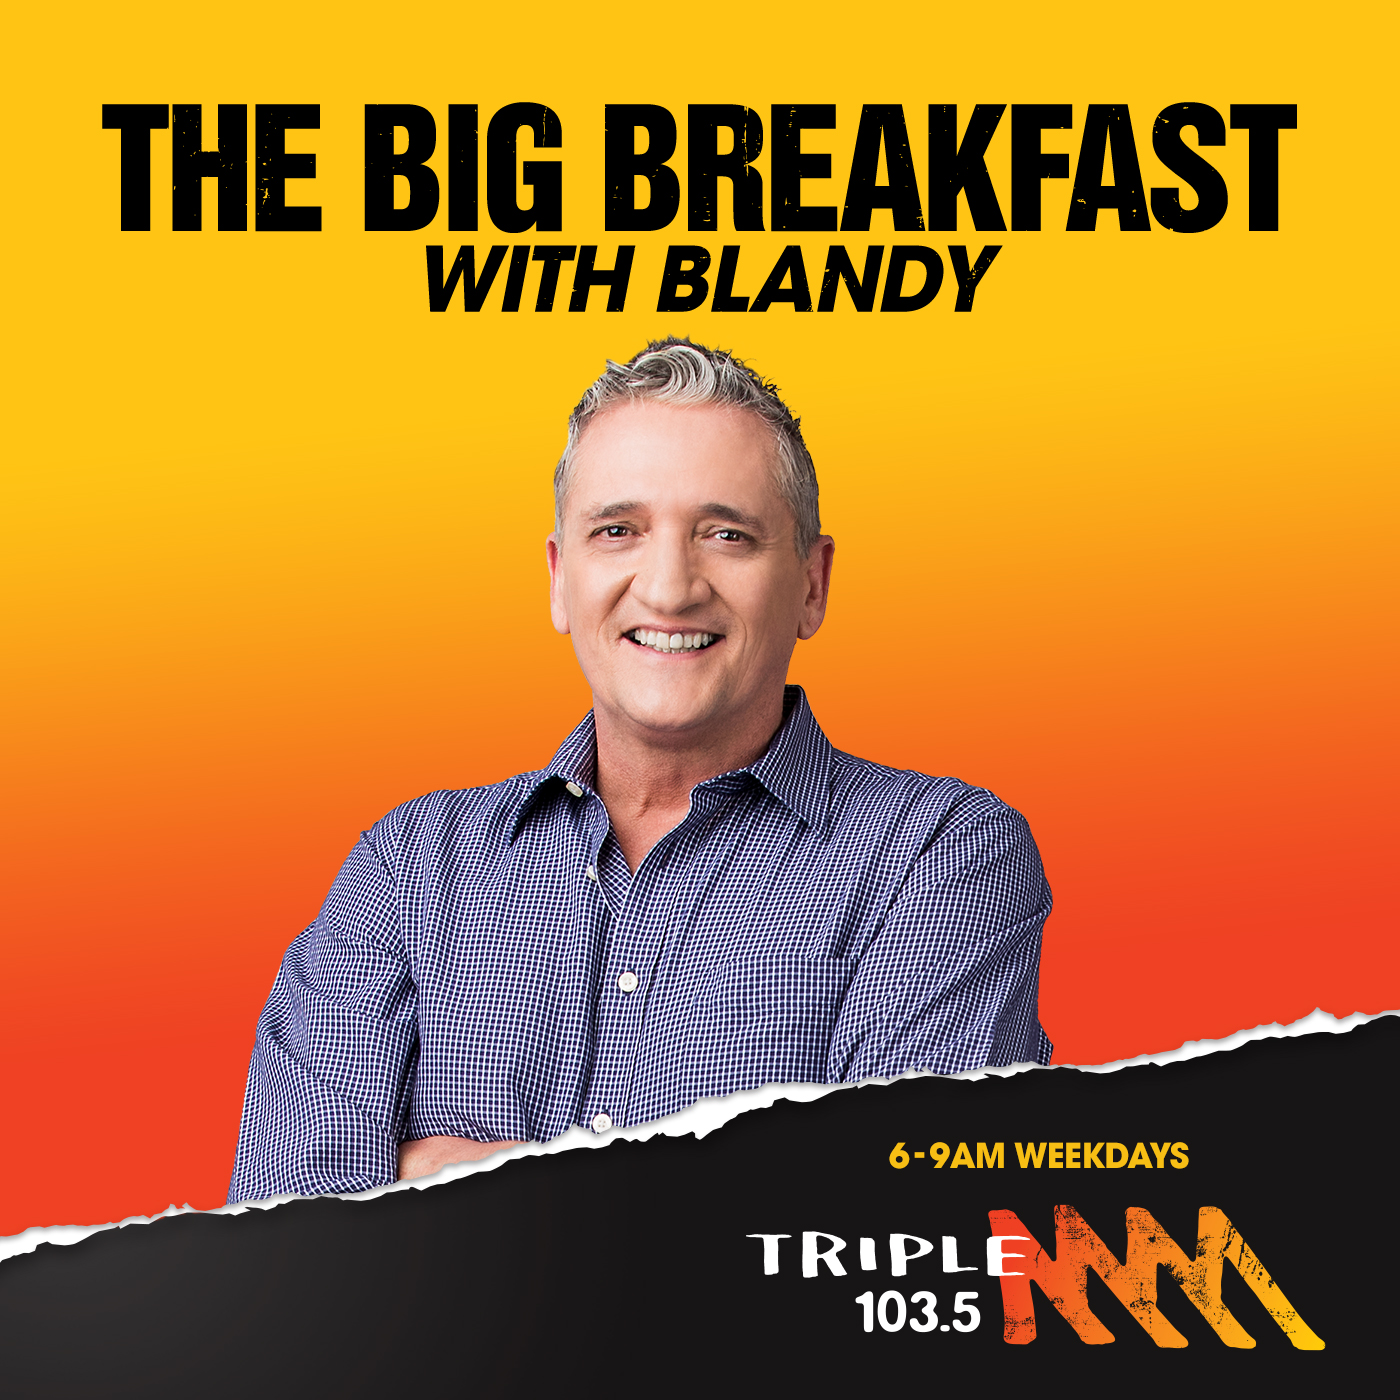 David Crisafulli joins Blandy in The Big Breakfast